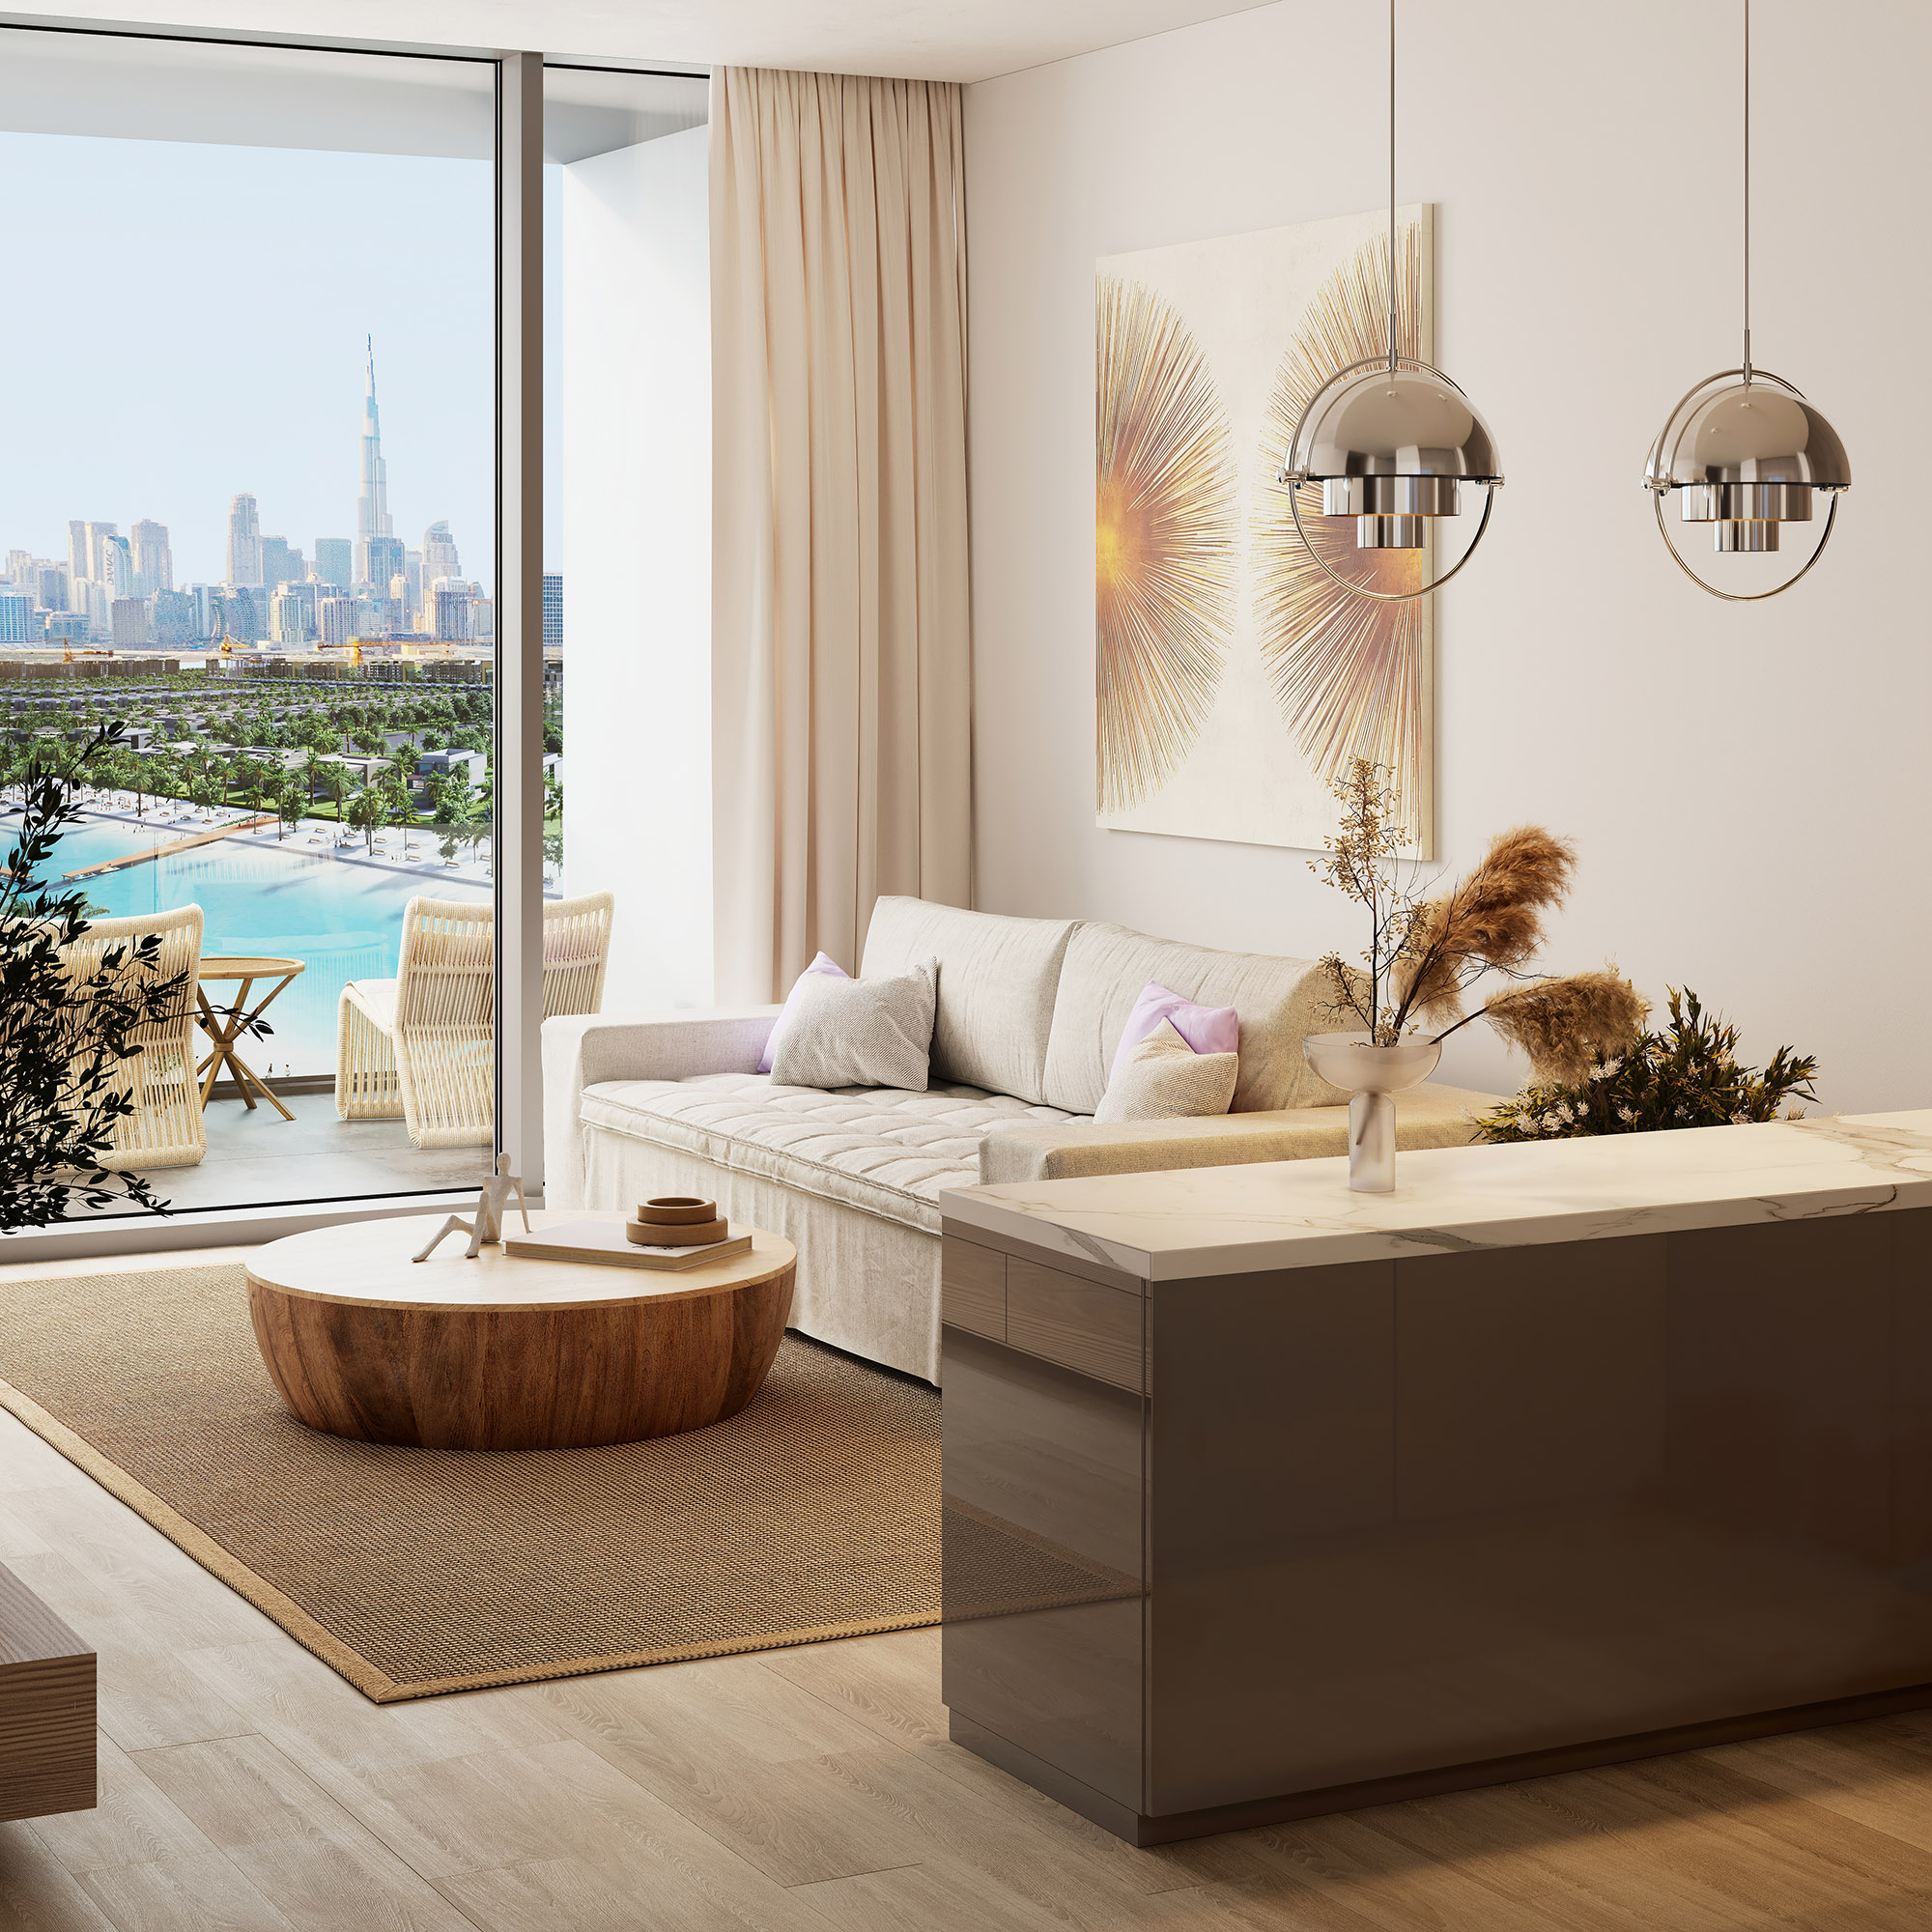 3 Bedroom Apartment For Sale In Dubai